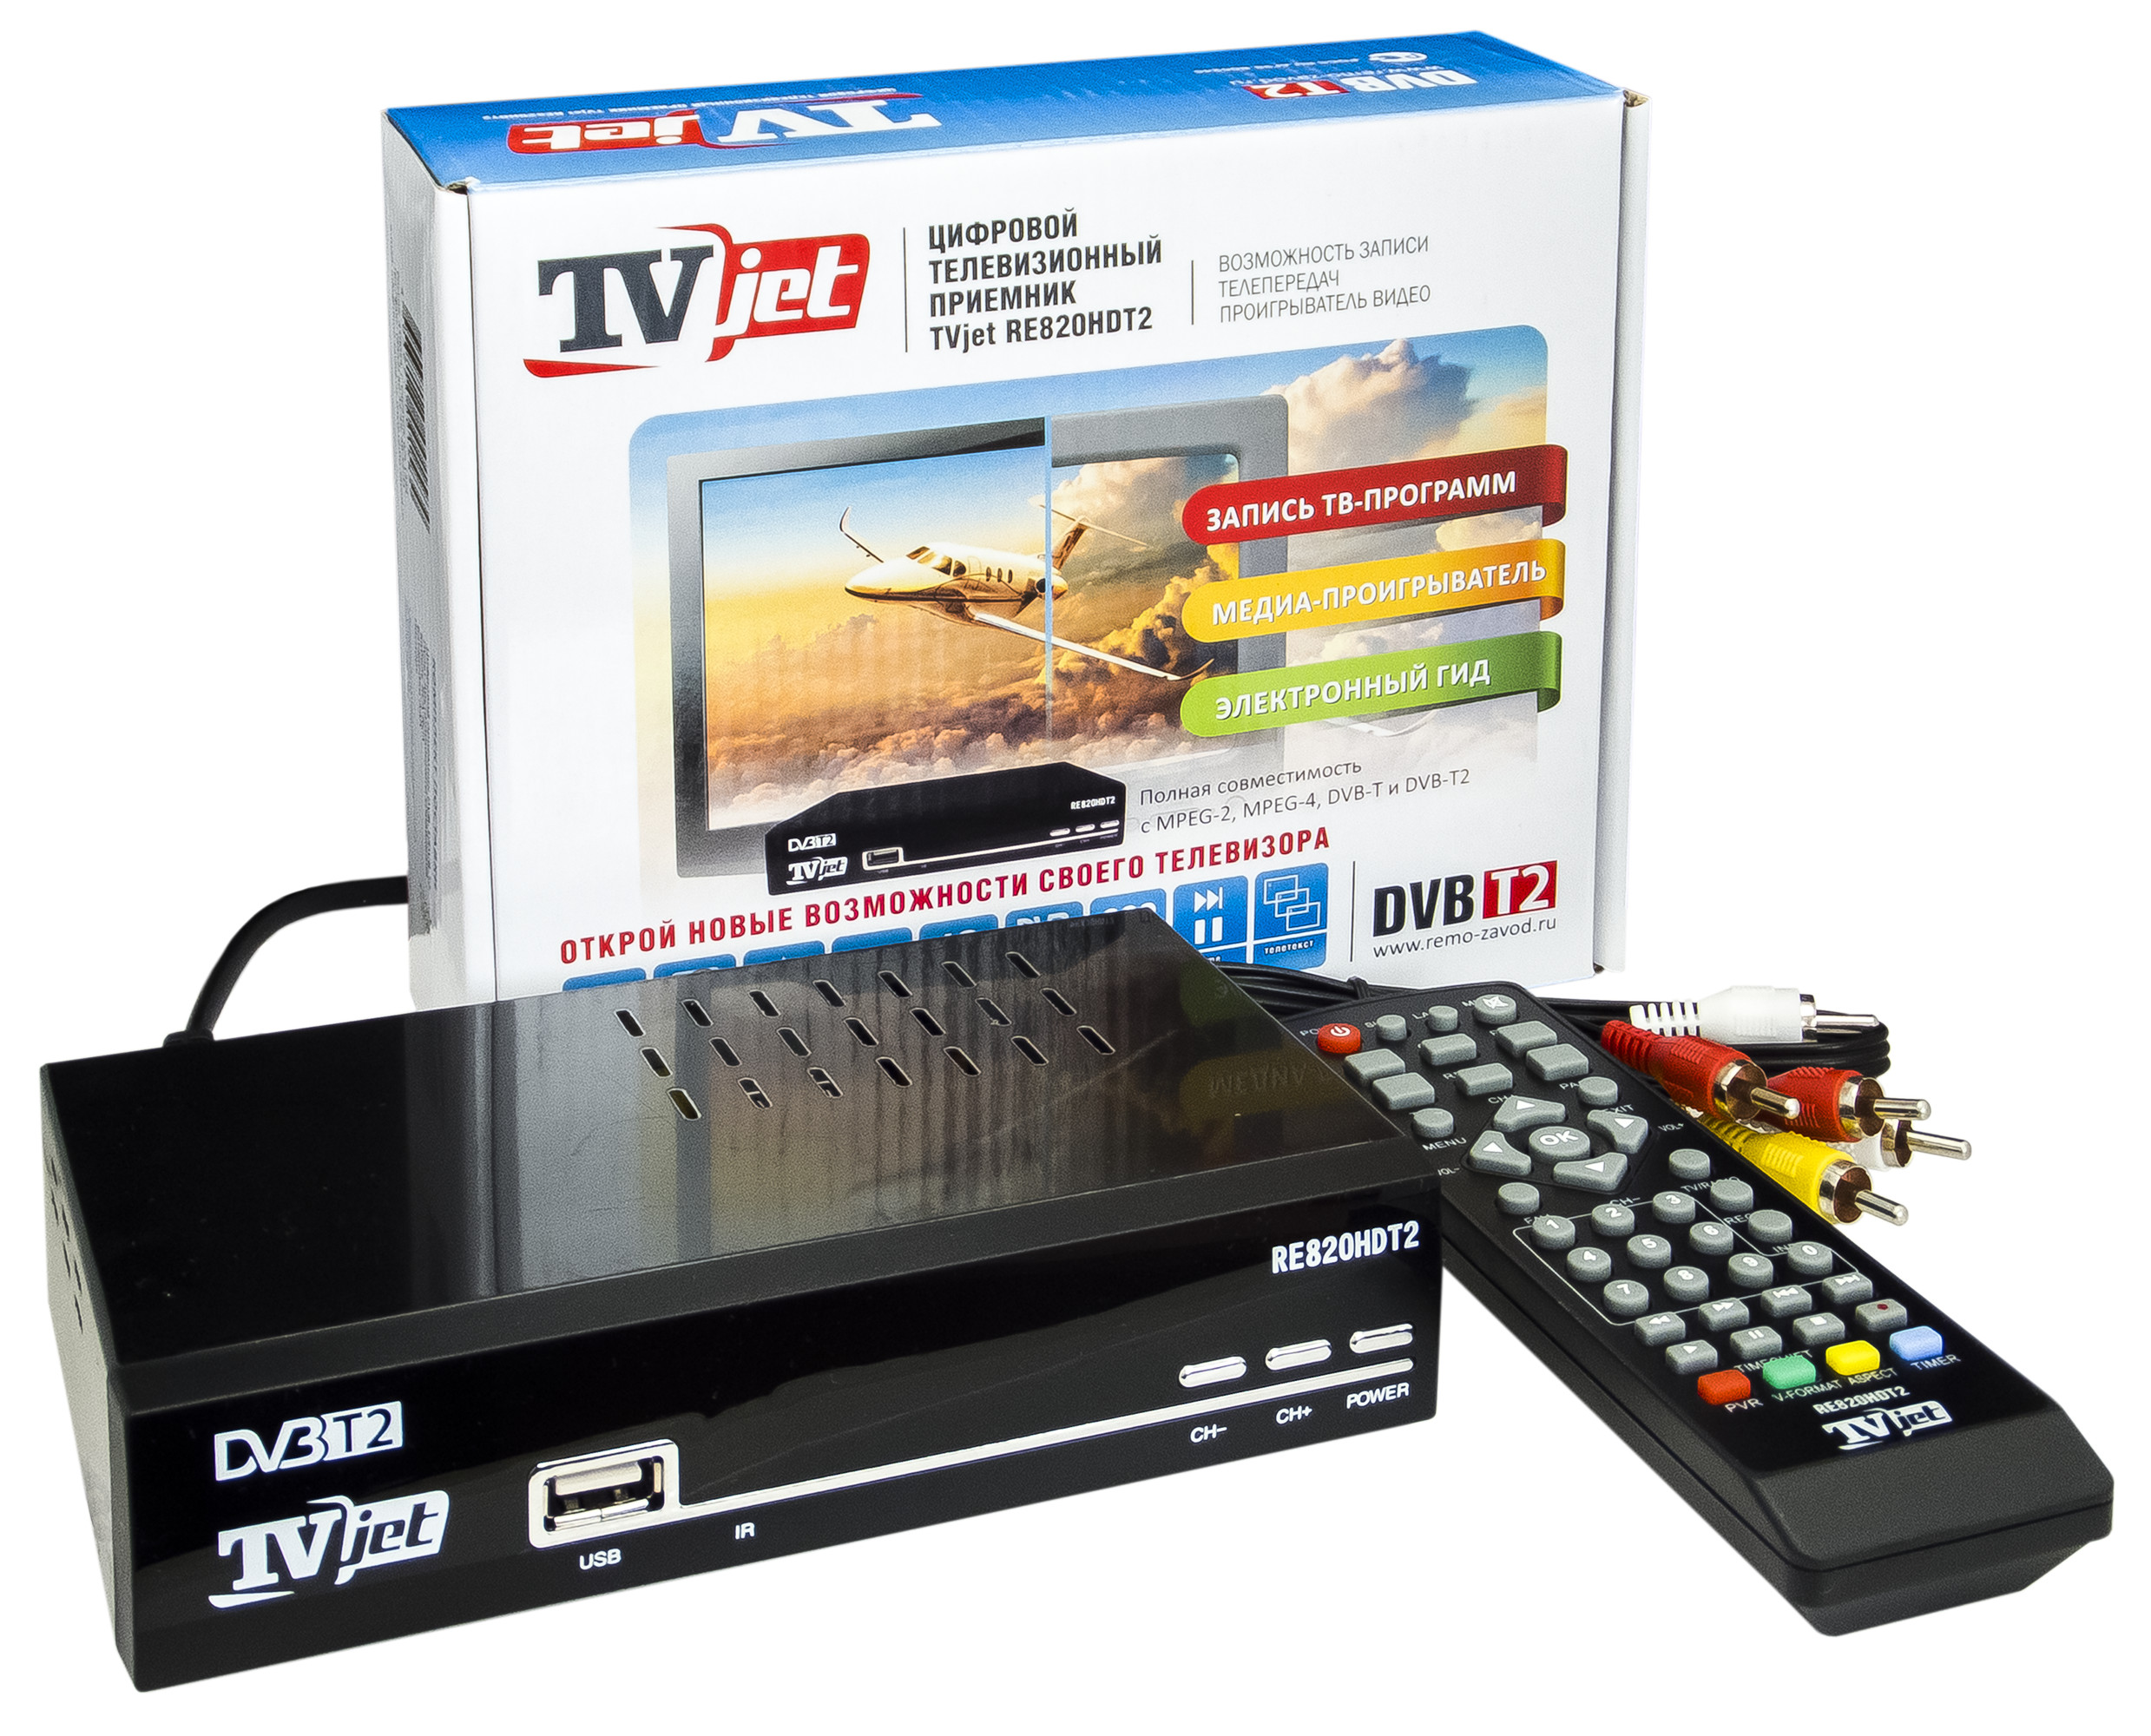 Для чего нужны тв приставки для телевизора. TV-тюнер РЭМО TVJET re820hdt2. Приемник цифровой MPEG DVB t2. Цифровая приставка DVB-t2. Приставка с антенной для цифрового ТВ Jet.